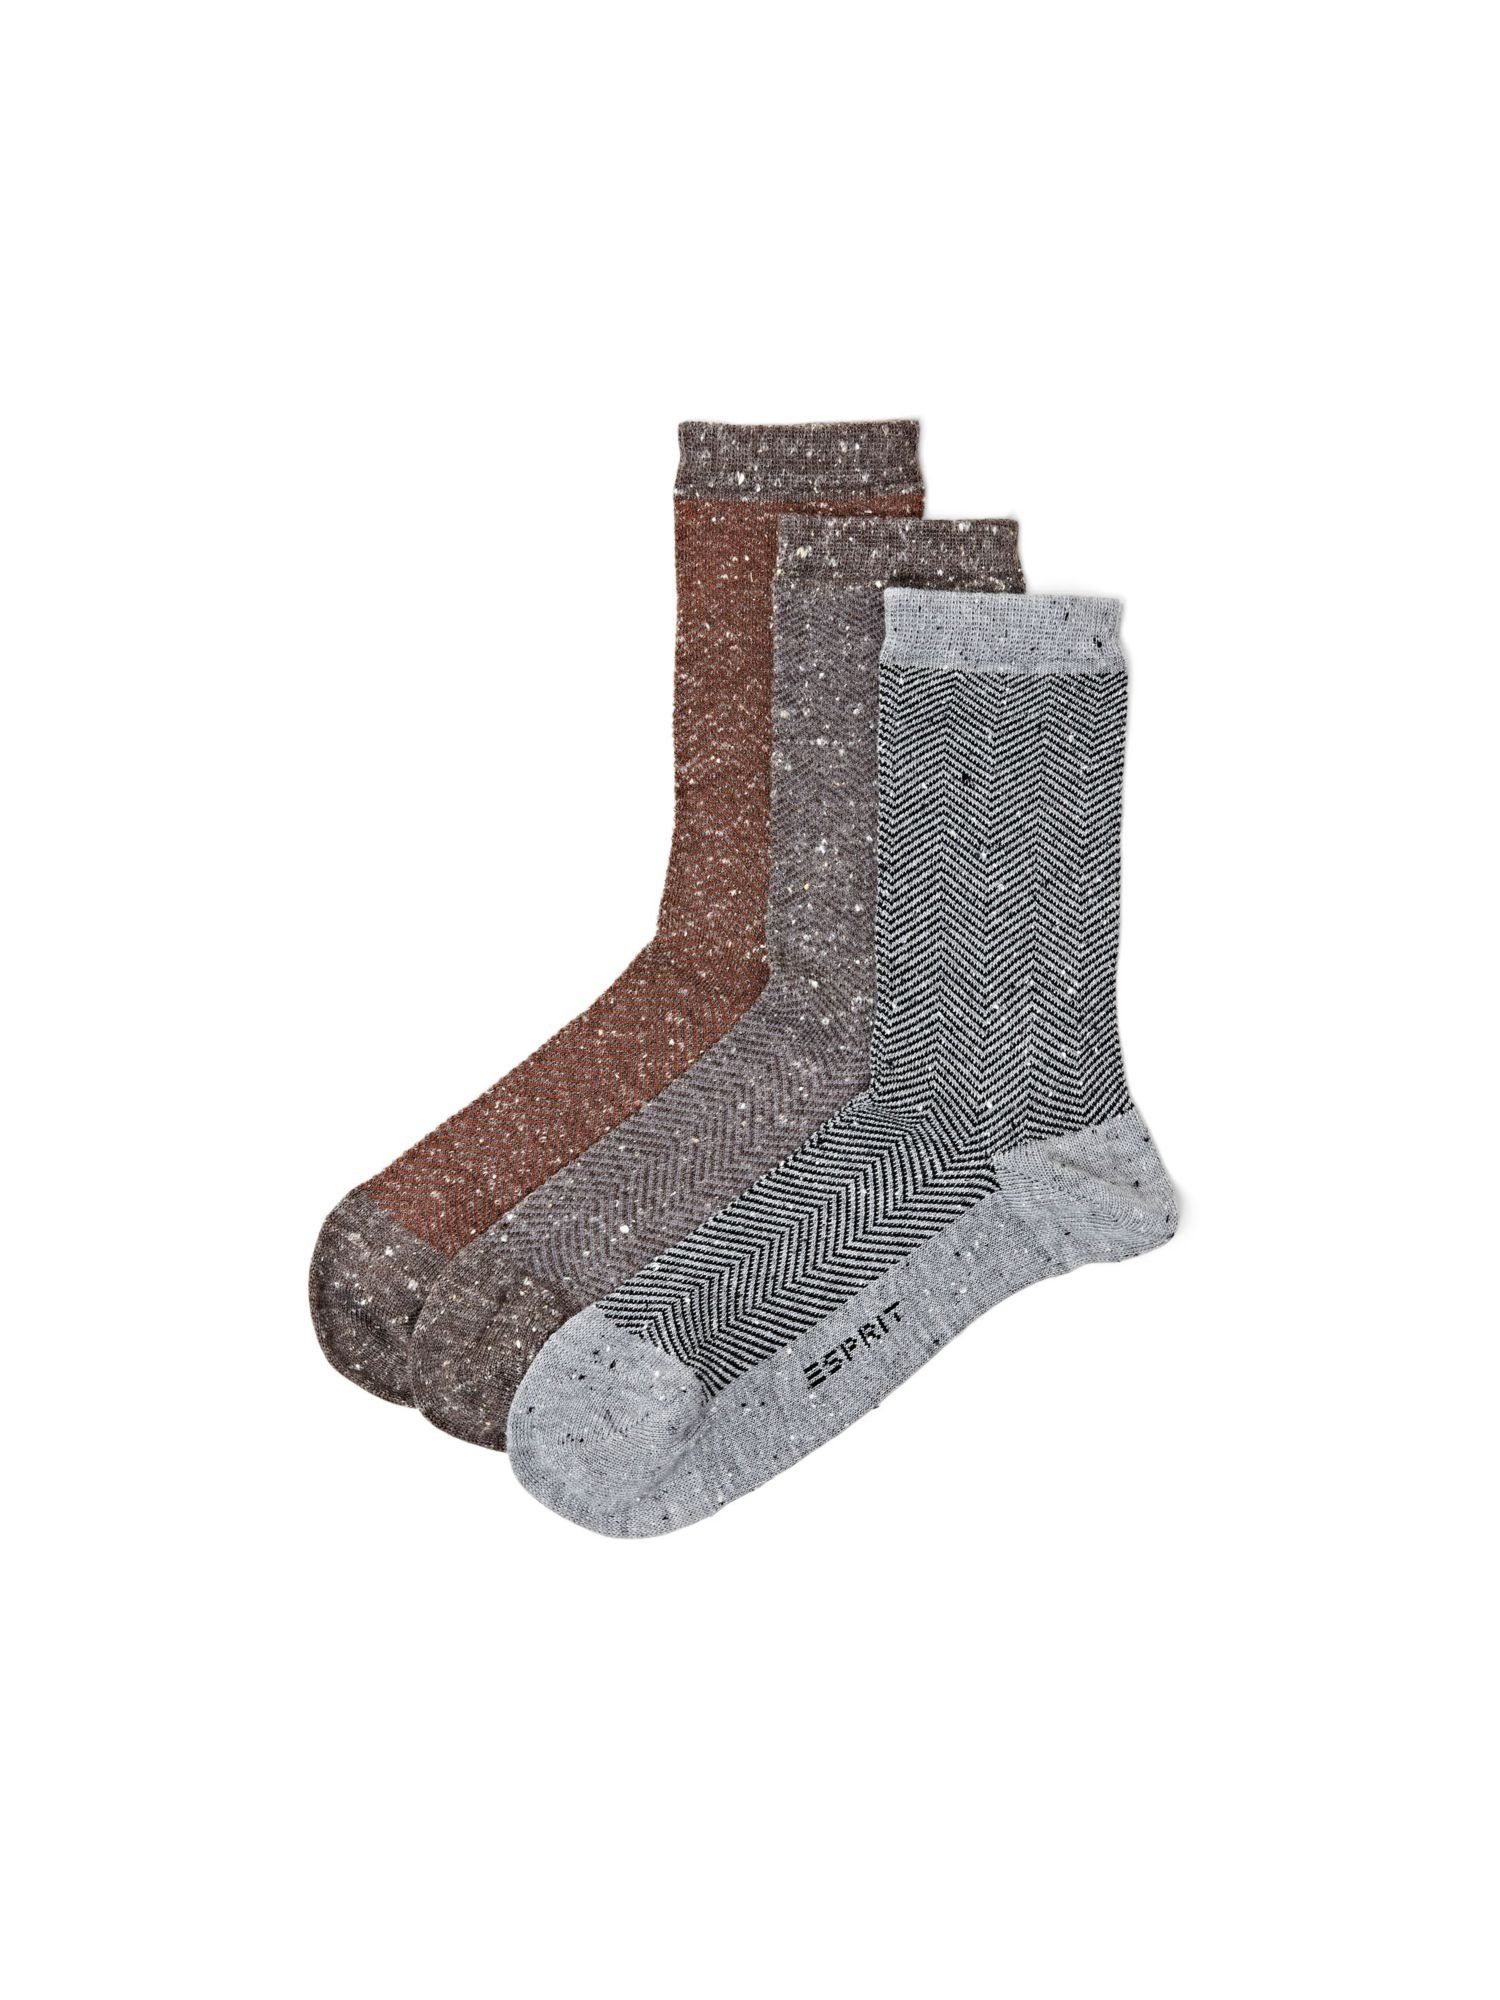 Esprit Socken 3er-Pack Socken mit BROWN/GREY Fischgratmuster